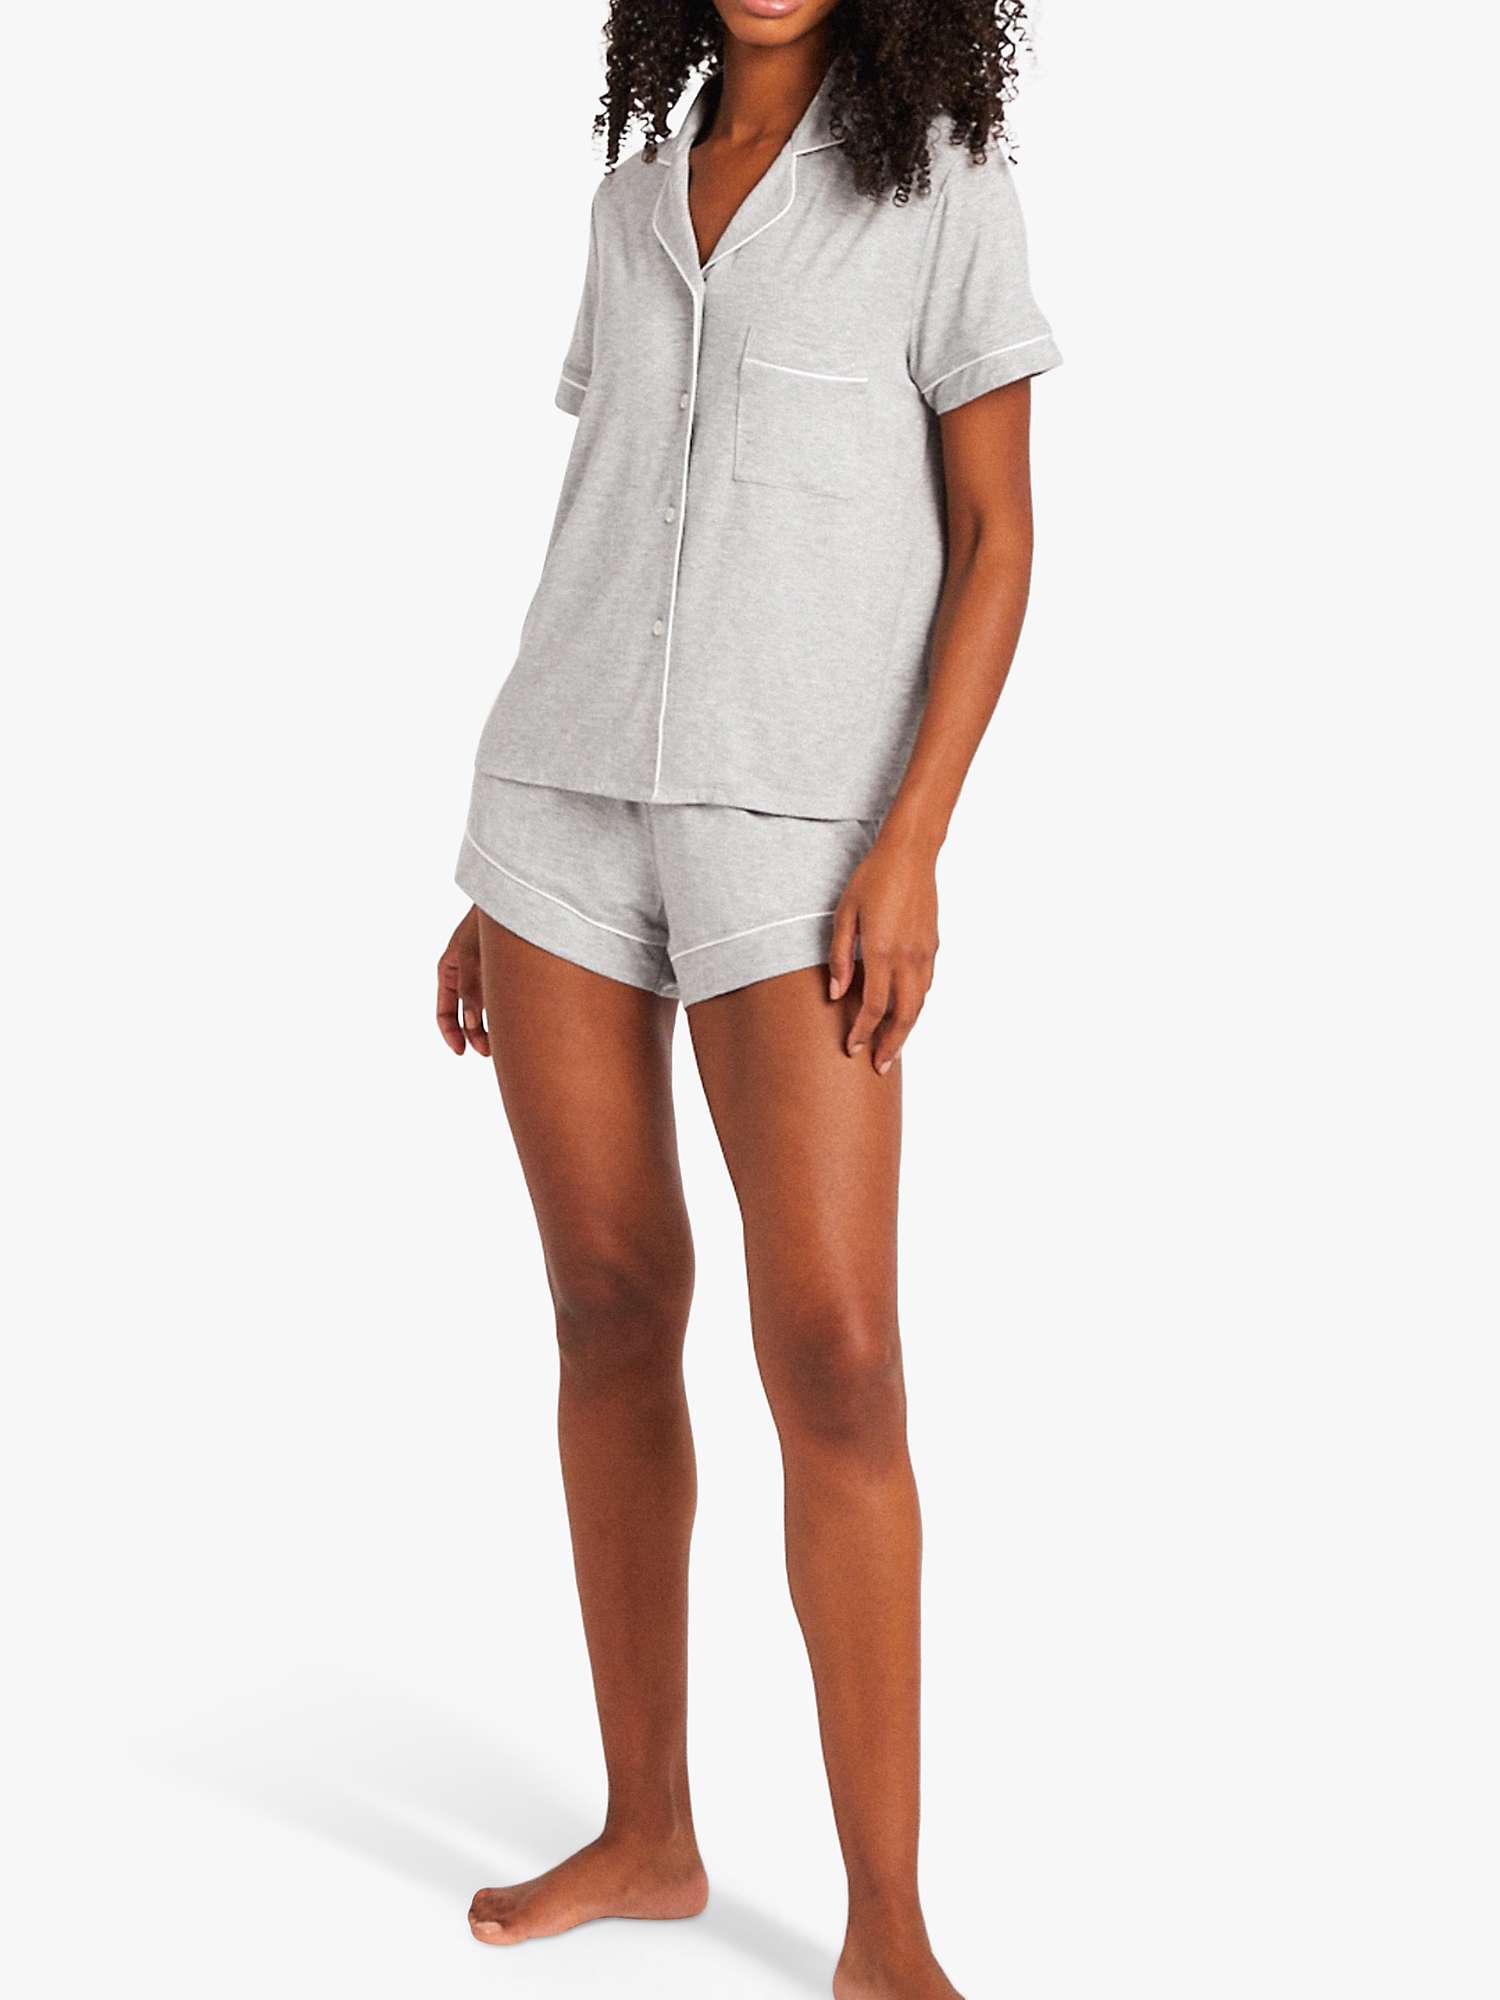 Chelsea Peers Modal Piped Shorts Pyjama Set, Grey at John Lewis & Partners